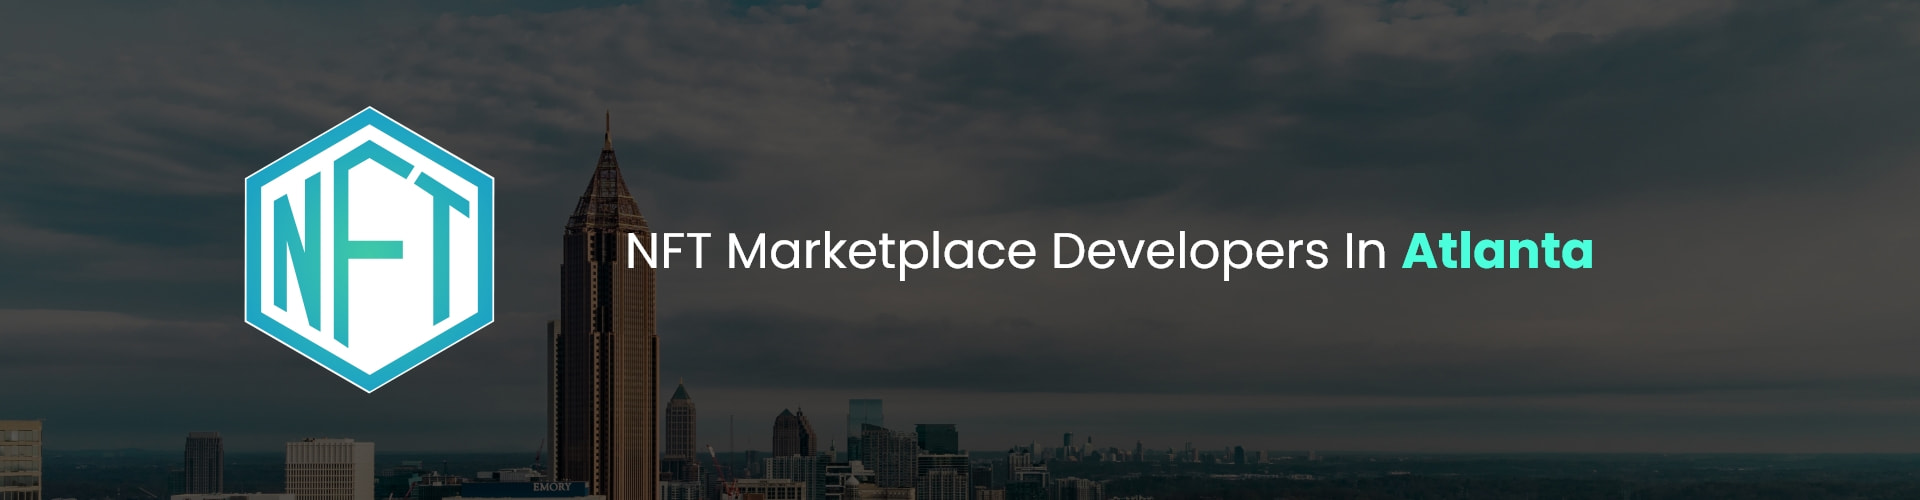 hire nft marketplace developers in atlanta